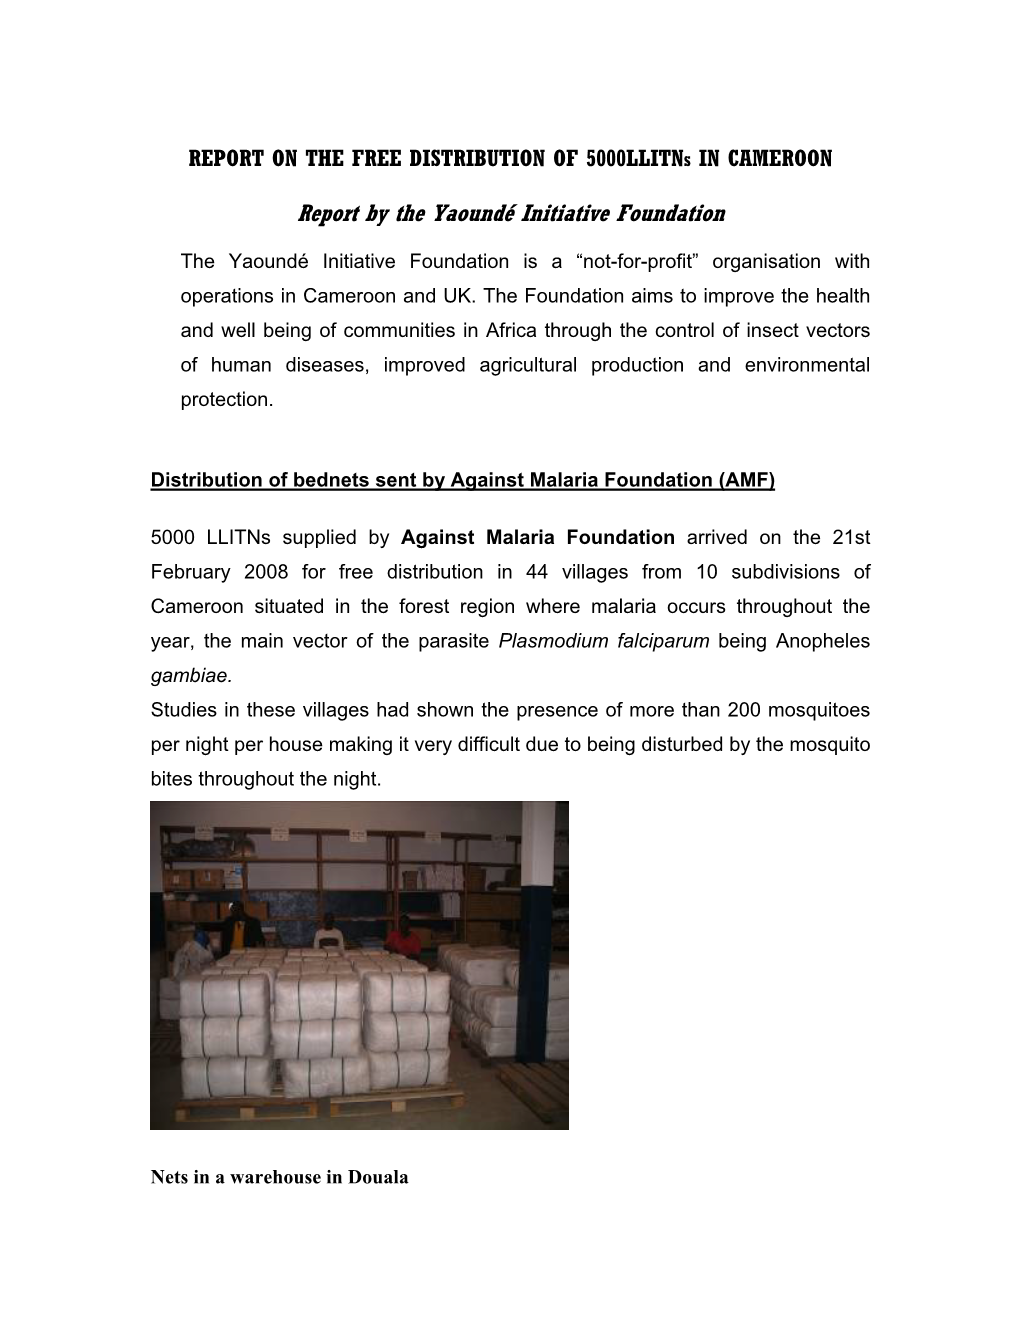 Report by the Yaoundé Initiative Foundation